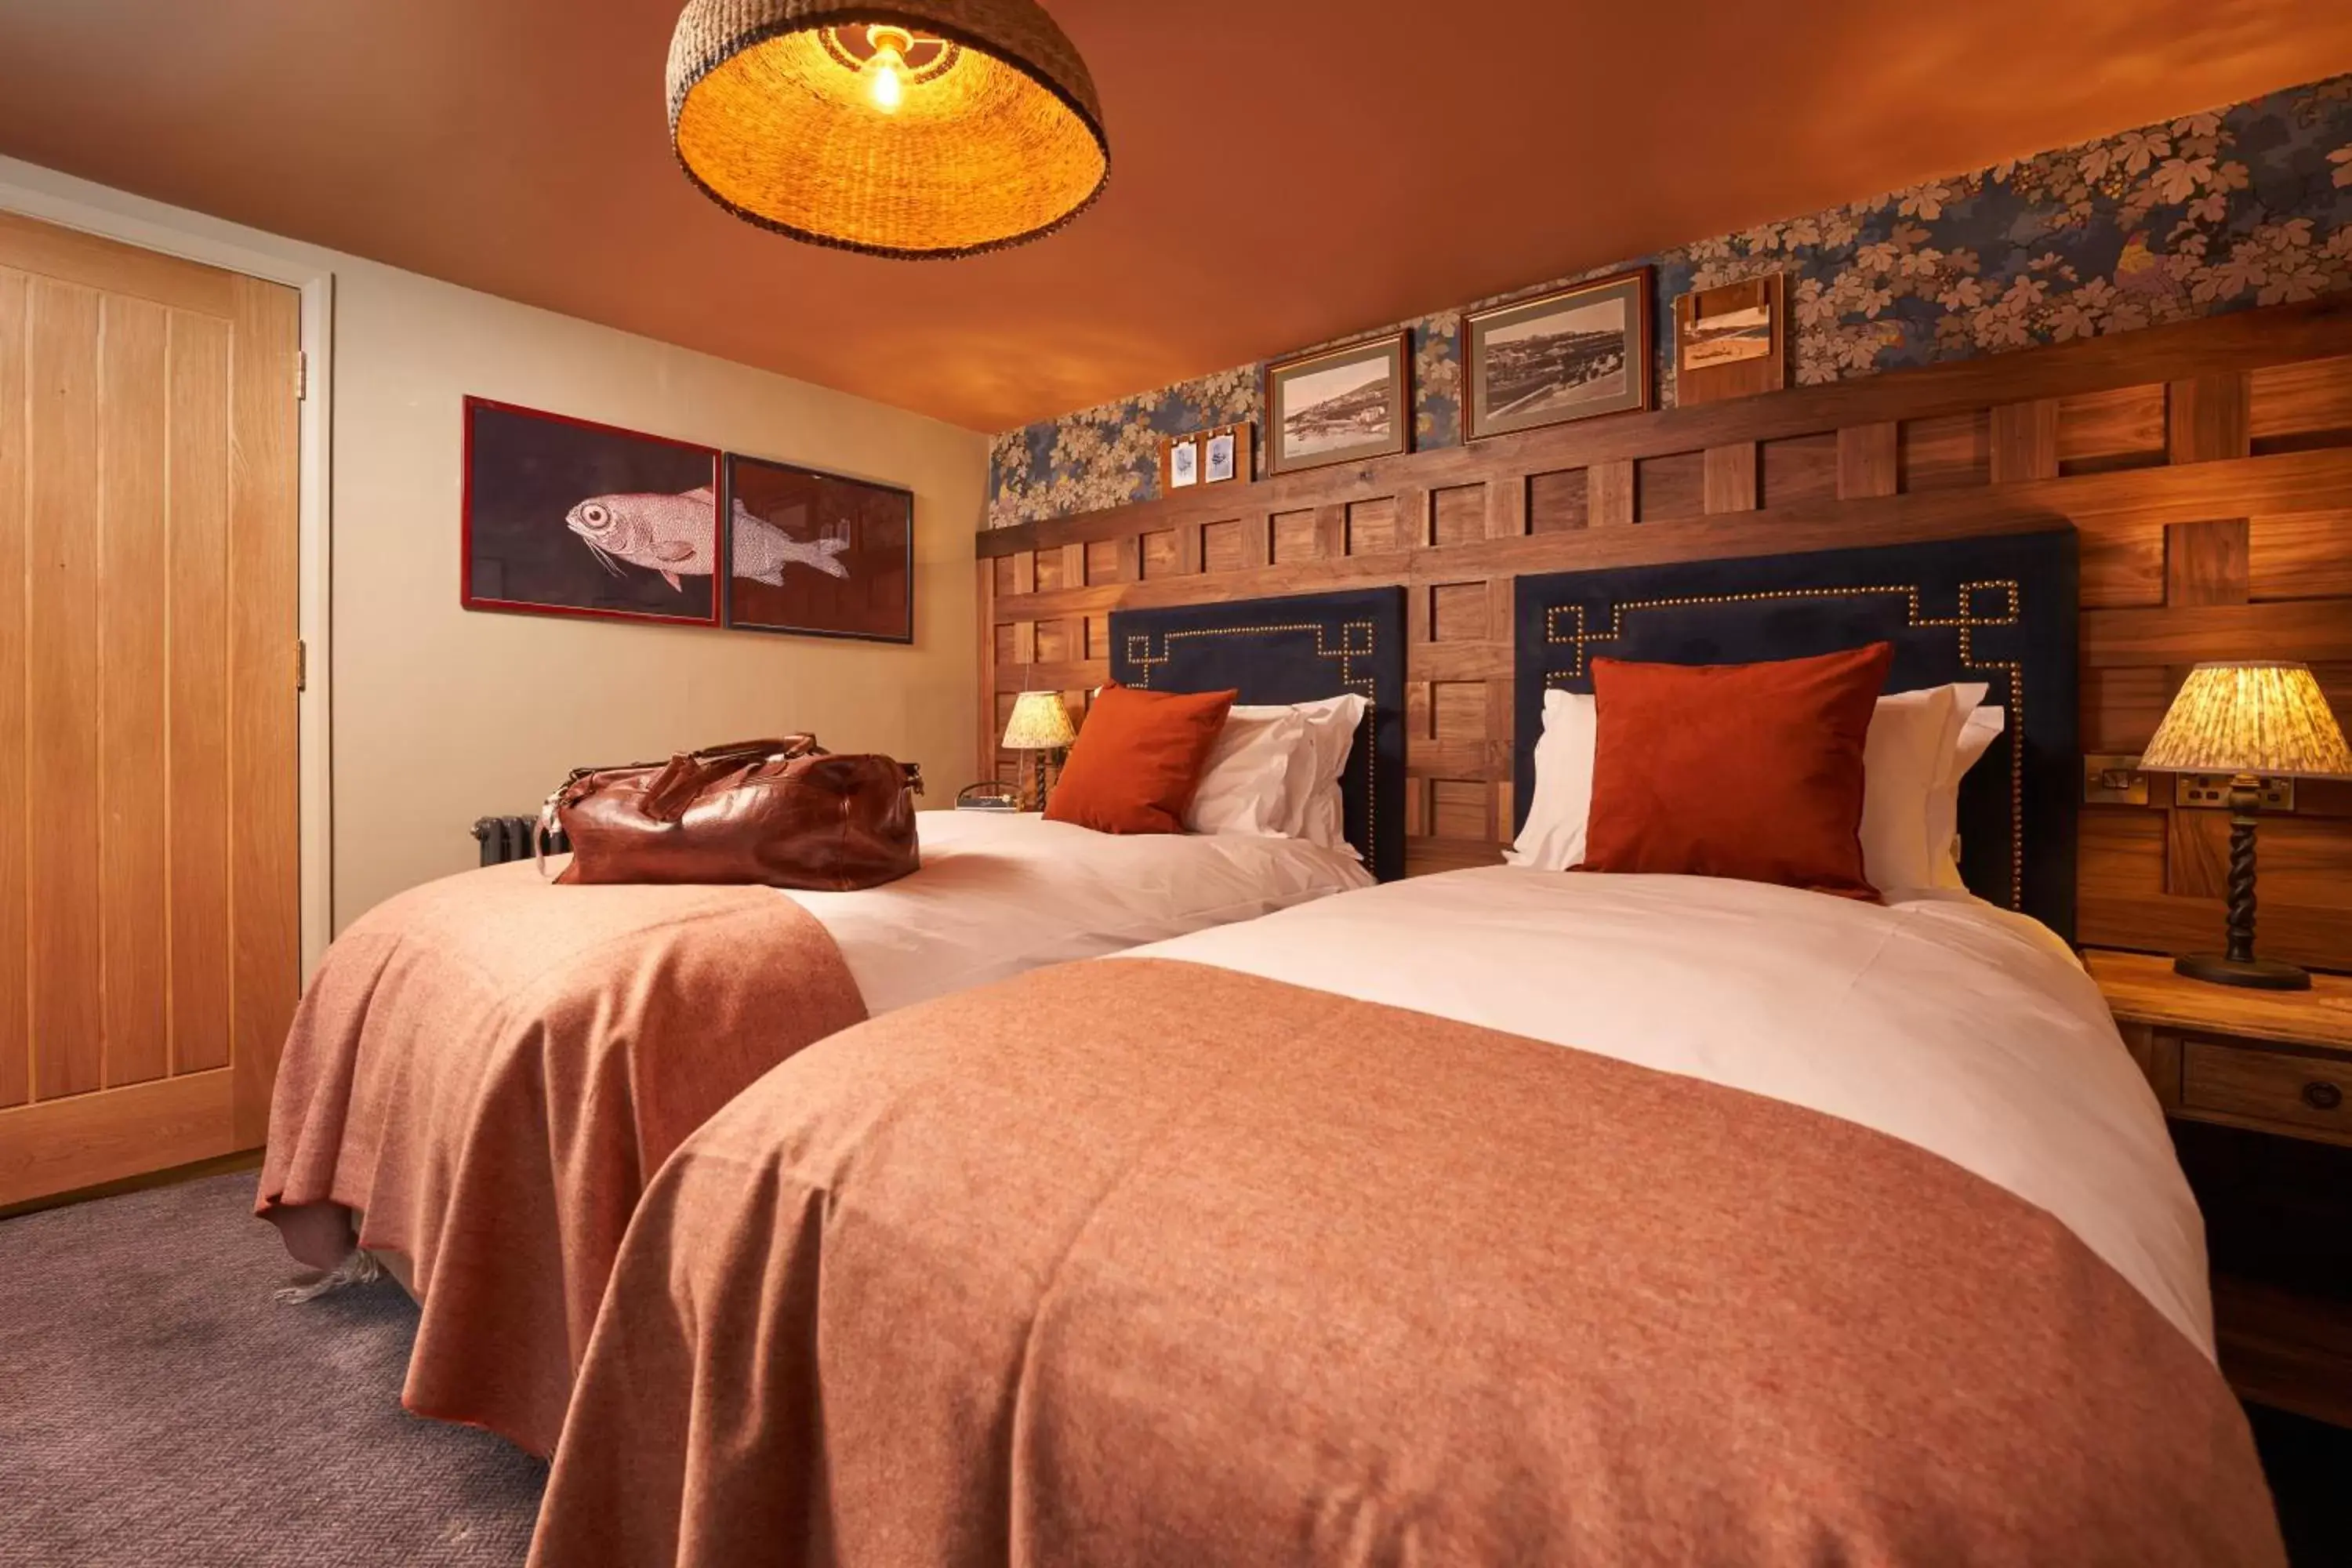 Bed in Harbour Inn